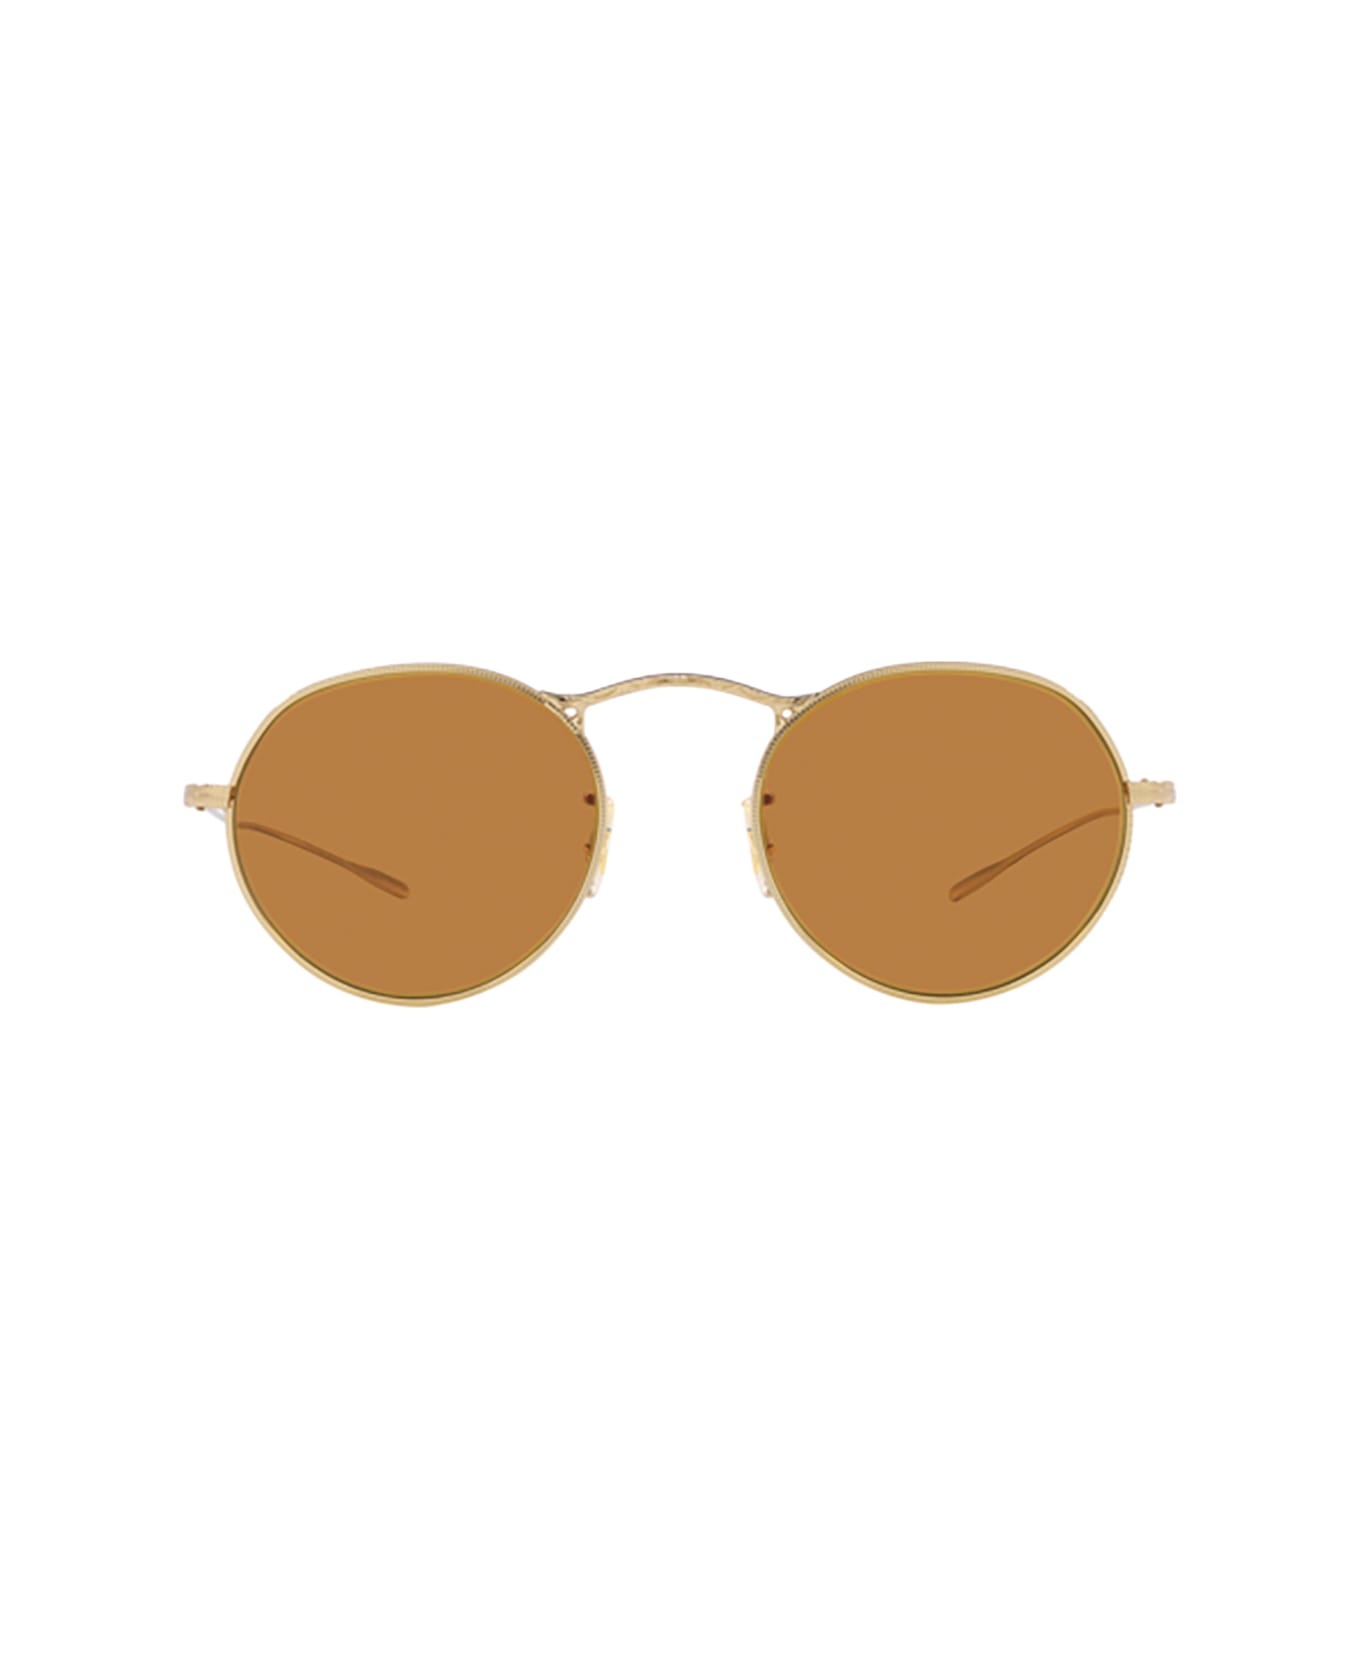 Oliver Peoples Ov1220s Gold Sunglasses - Gold